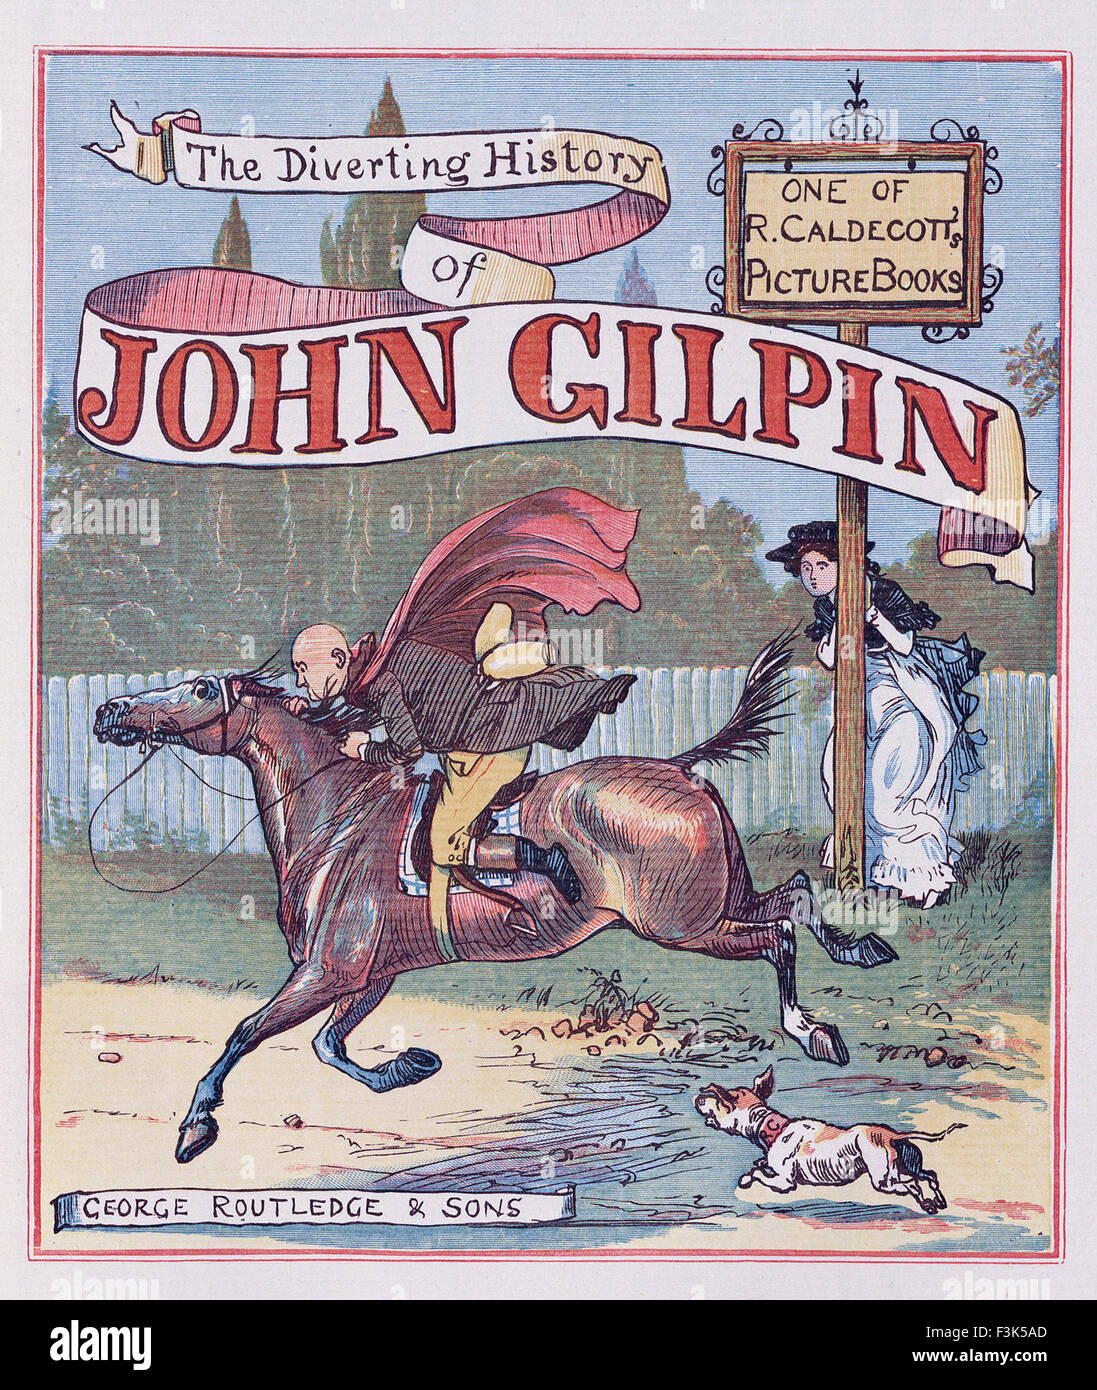 RANDOLPH CALDECOTT (1846-1886) English illustrator. Cover of his 1878 illustrated book on John Gilpin Stock Photo